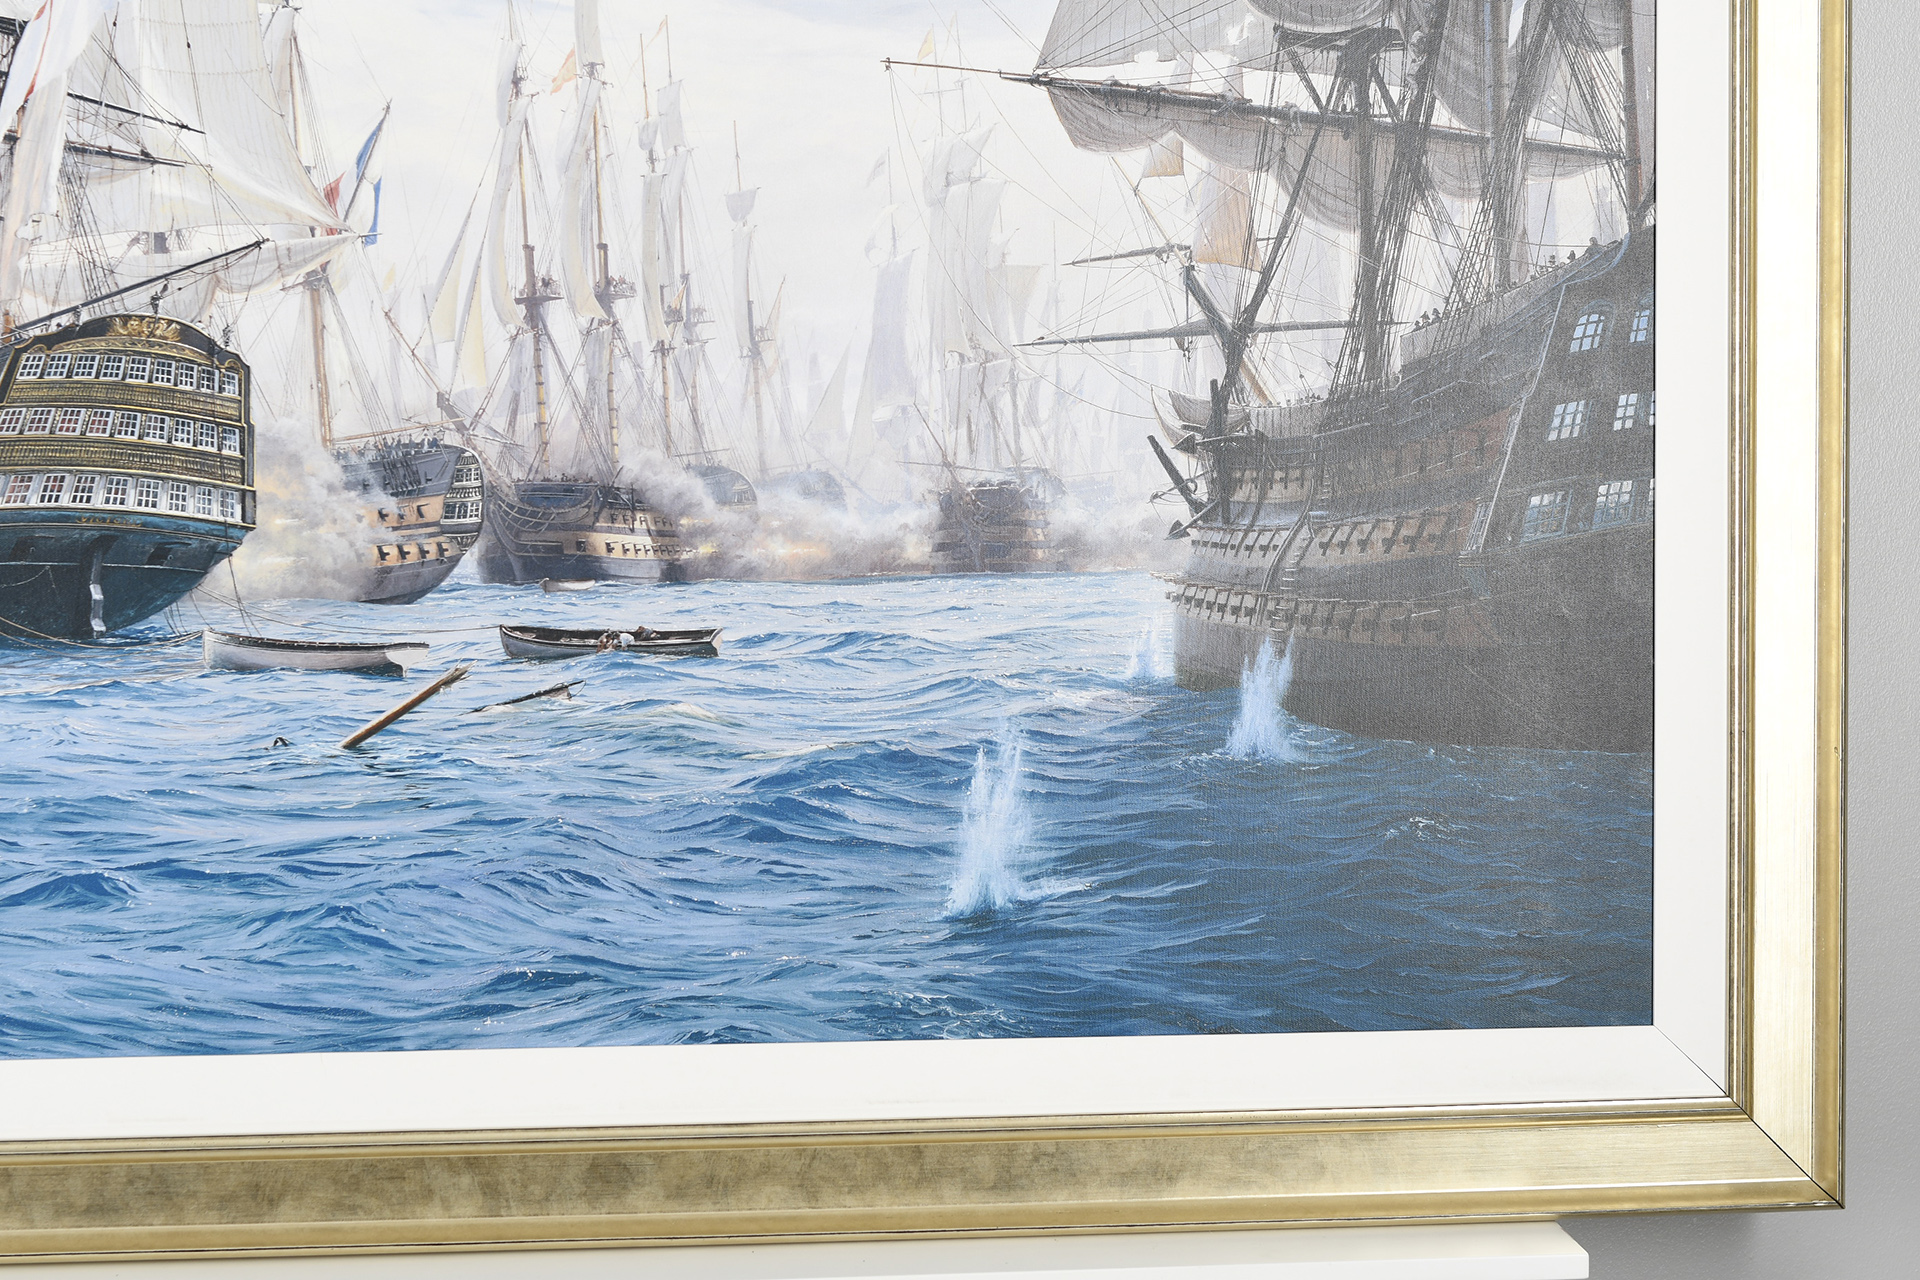 Framed Limited Edition on Canvas by World Renowned Marine Artist Steven Dews "The Battle of Trafalgar"